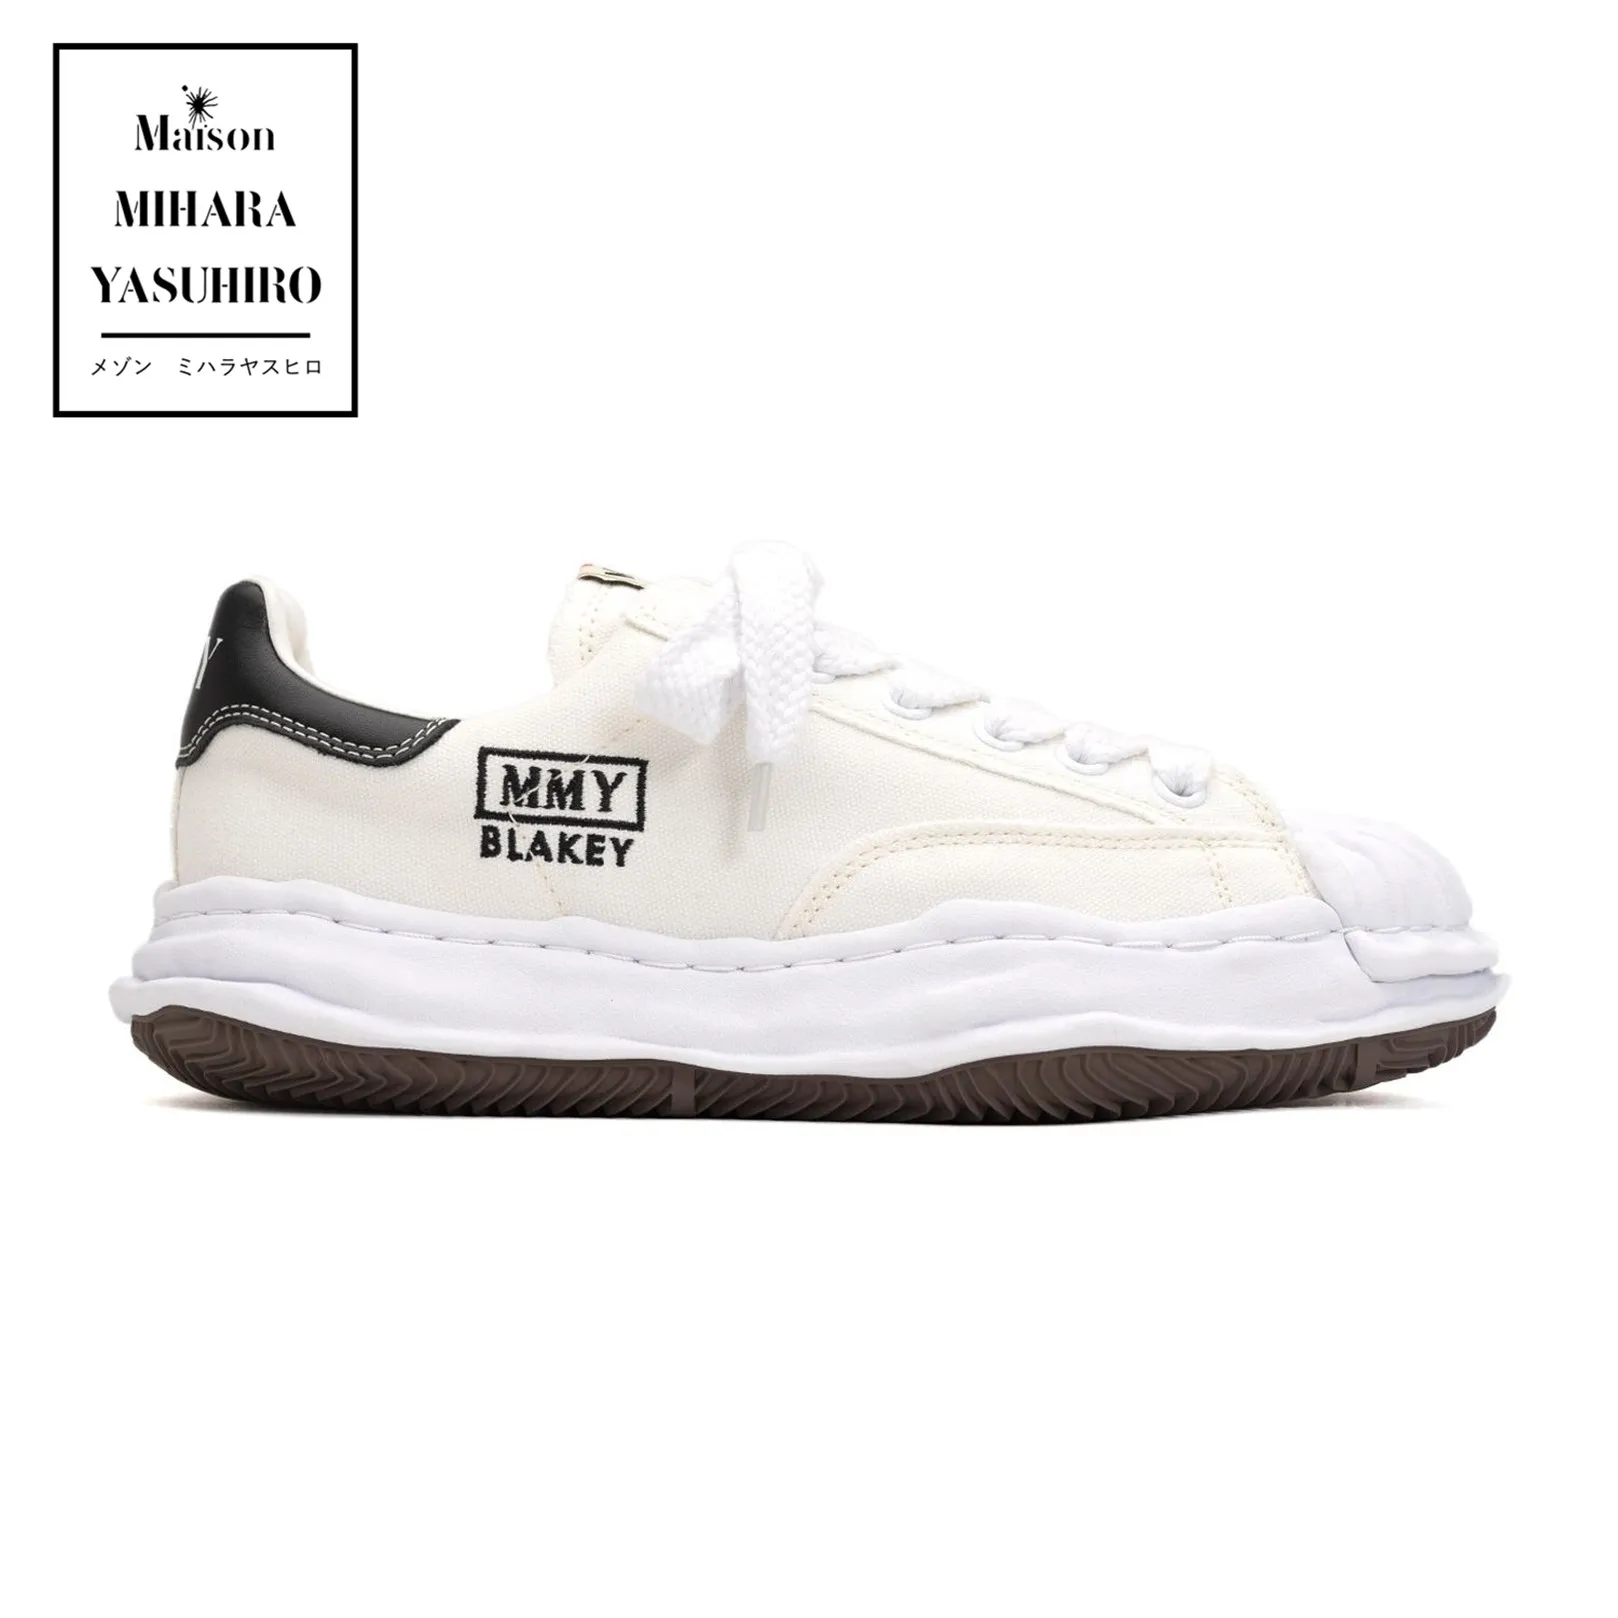 

MMY Maison MIHARA YASUHIRO Wayne BLAKEY VL OG Sole Leather Low-top Sneaker White Men's Women's canvas shoe